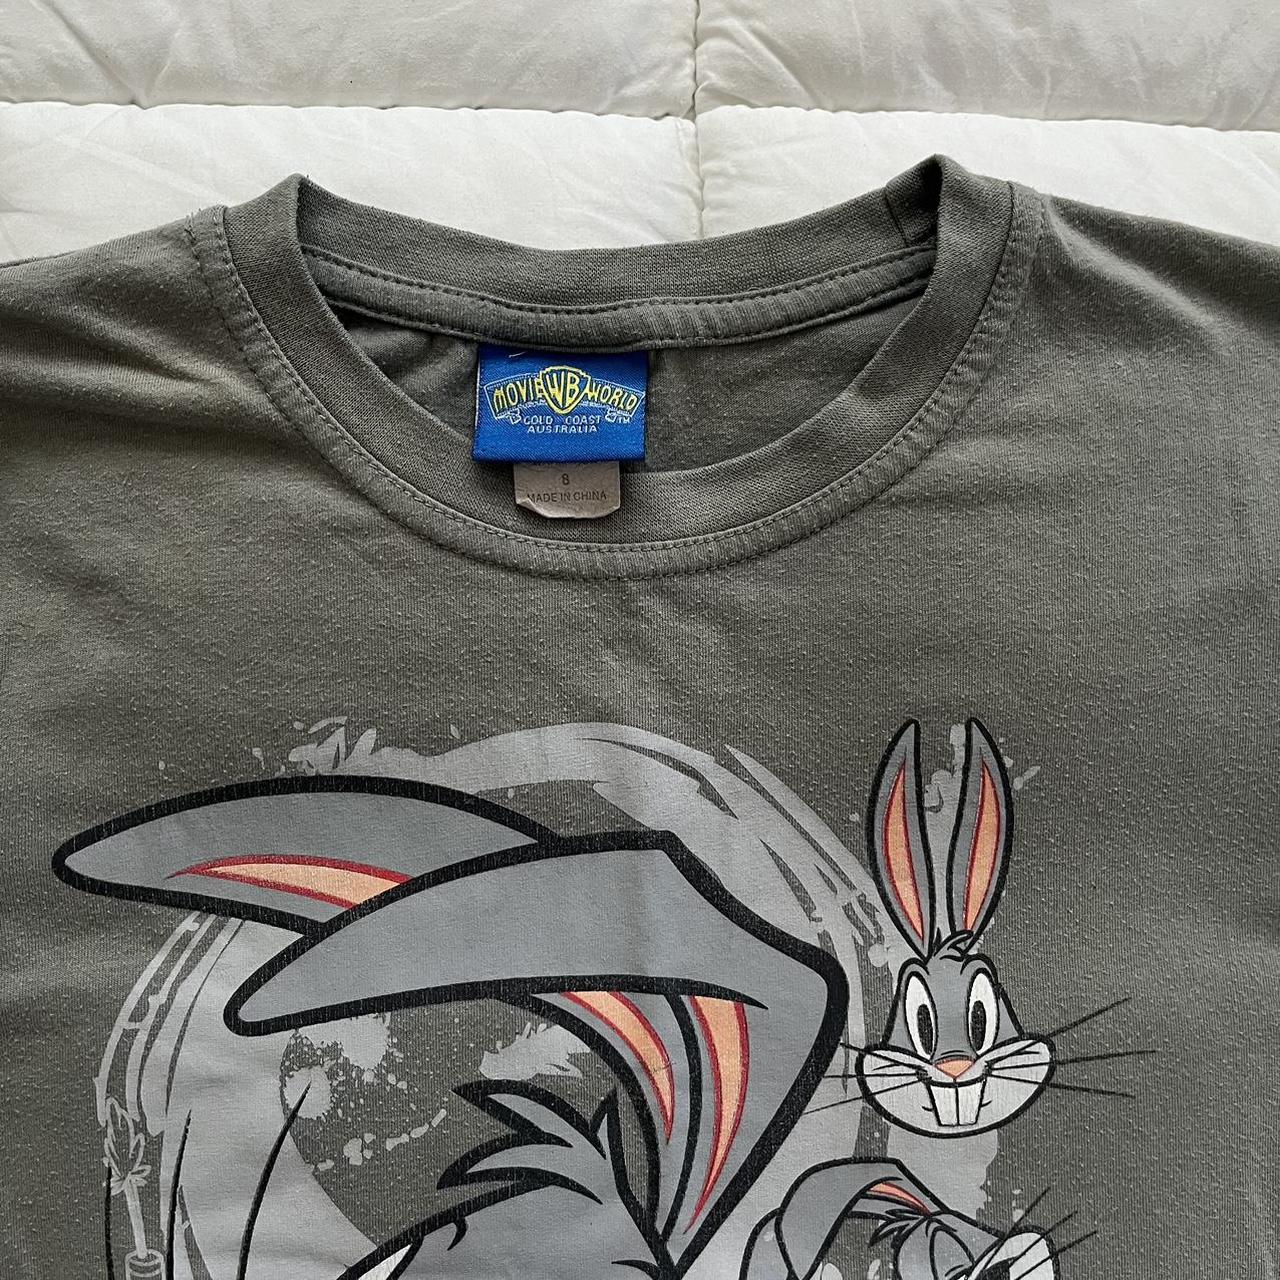 2000s movie world bugs bunny grey tshirt classic... - Depop